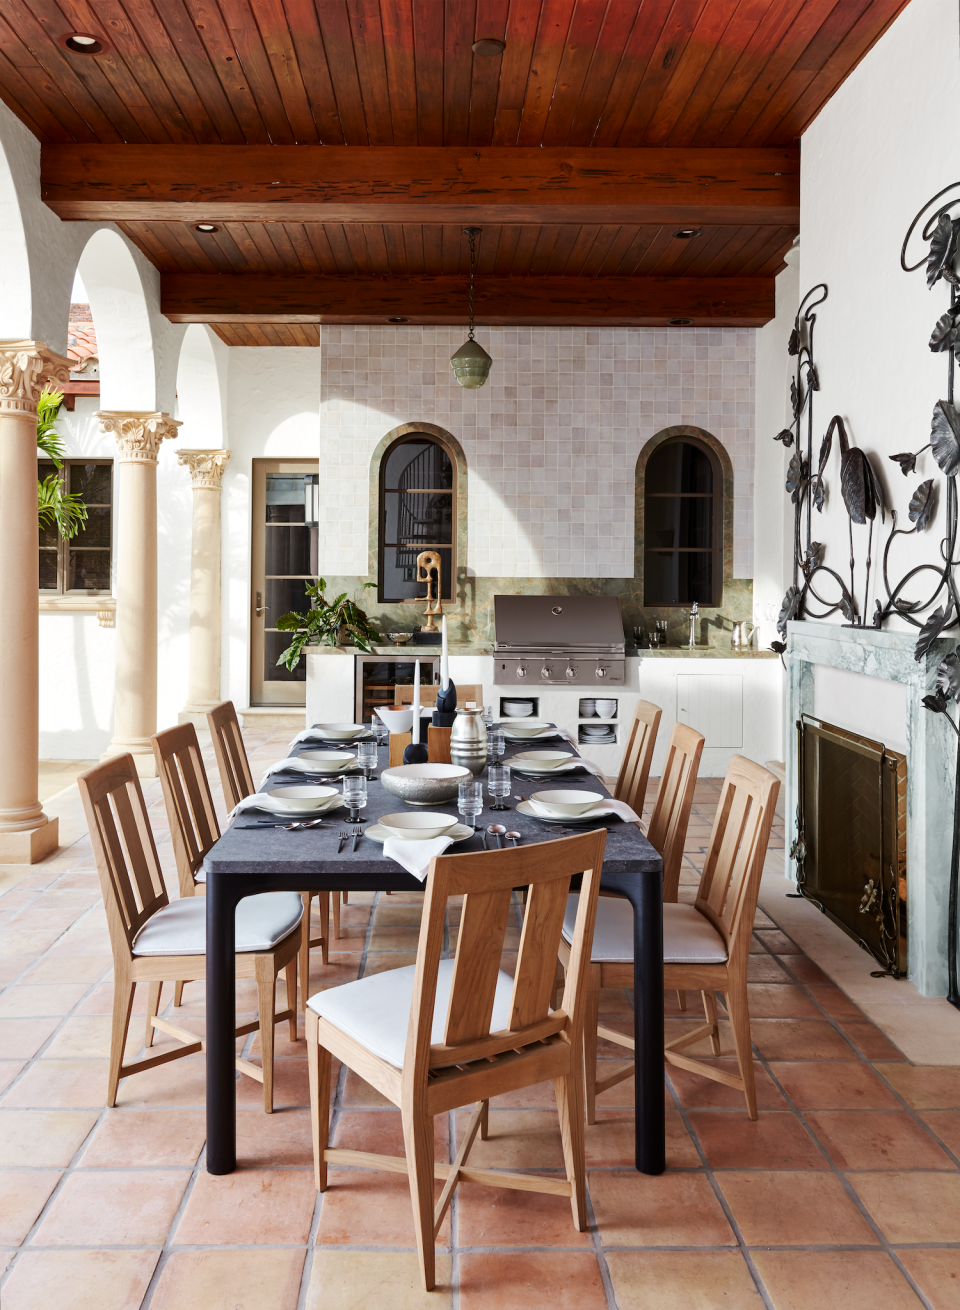 24 Stunning Outdoor Kitchen Ideas for Dining Alfresco All Summer Long